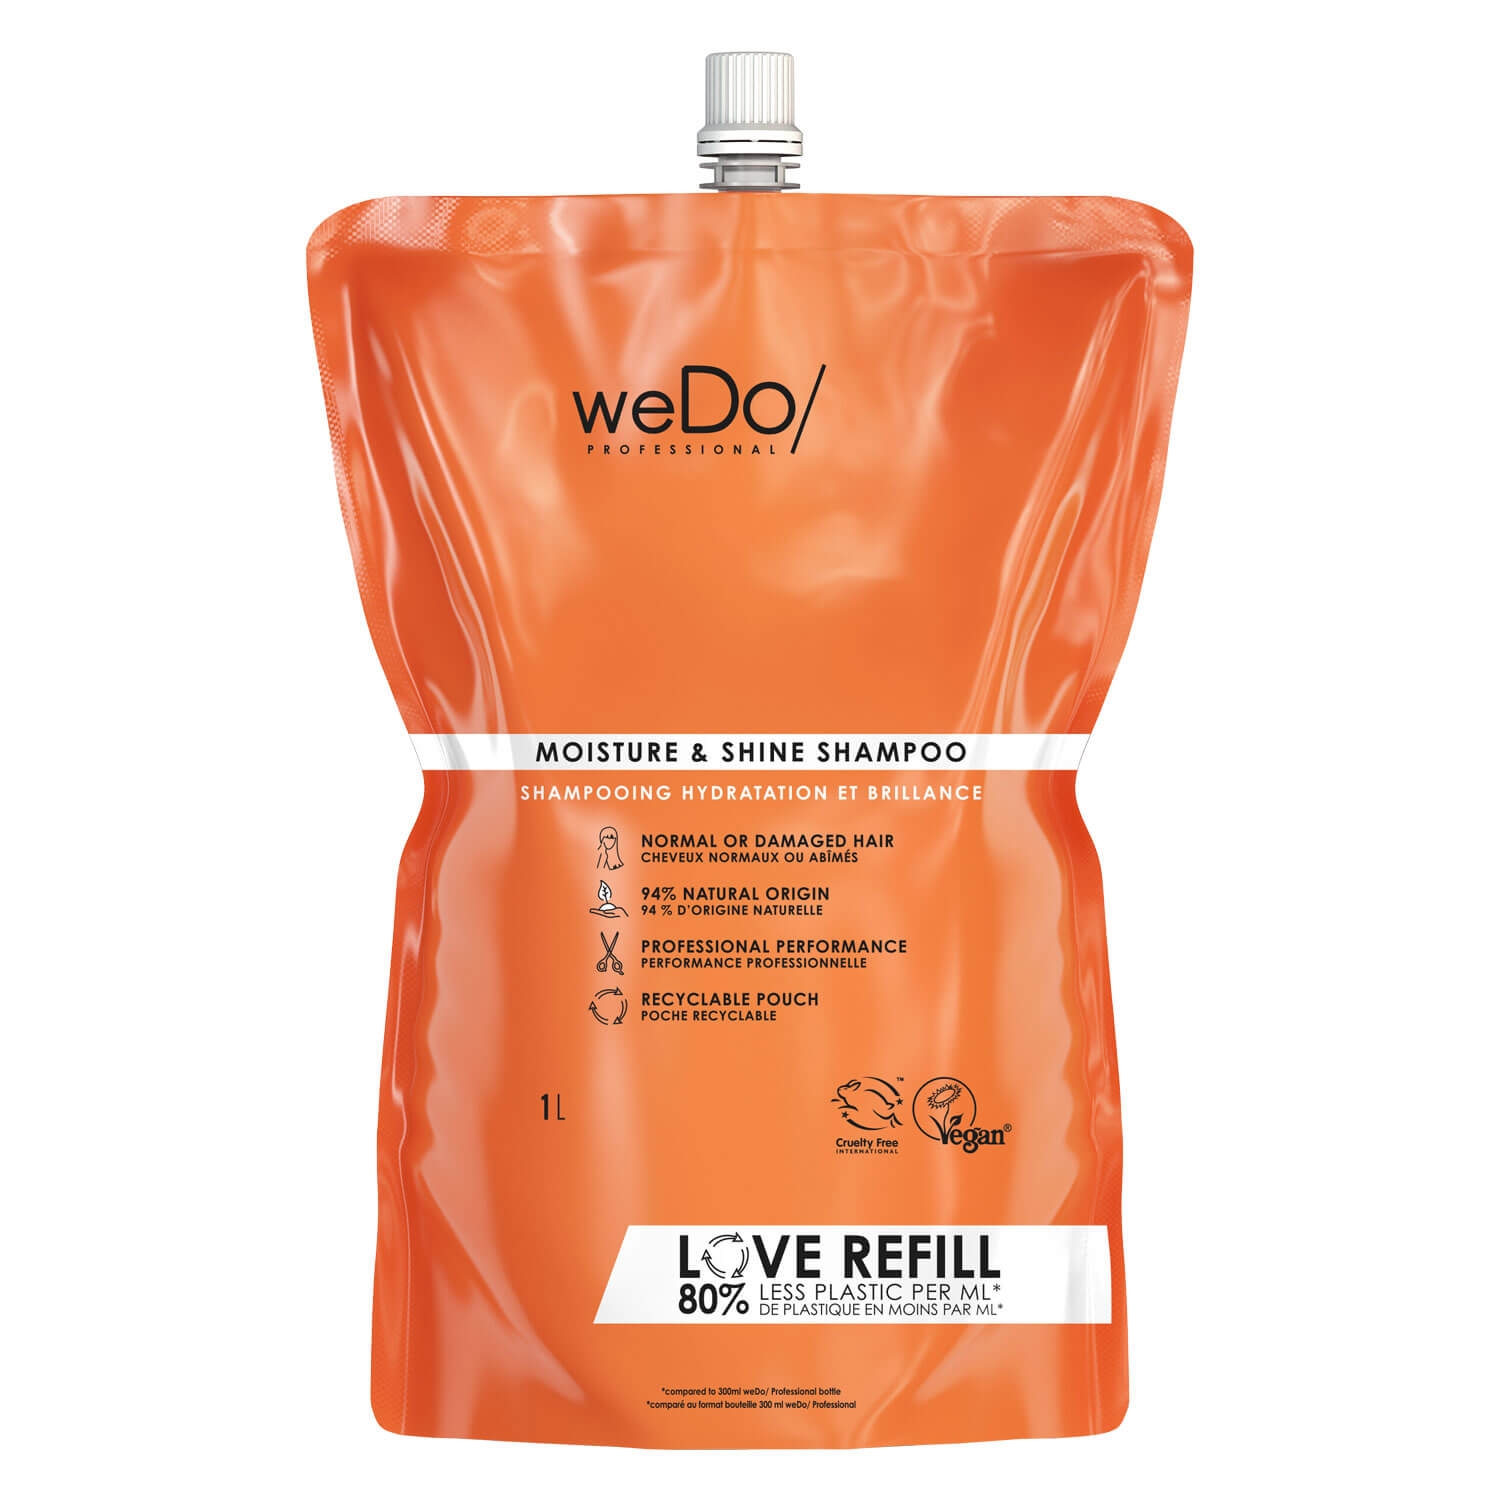 Product image from weDo/ - Moisture & Shine Shampoo Refill